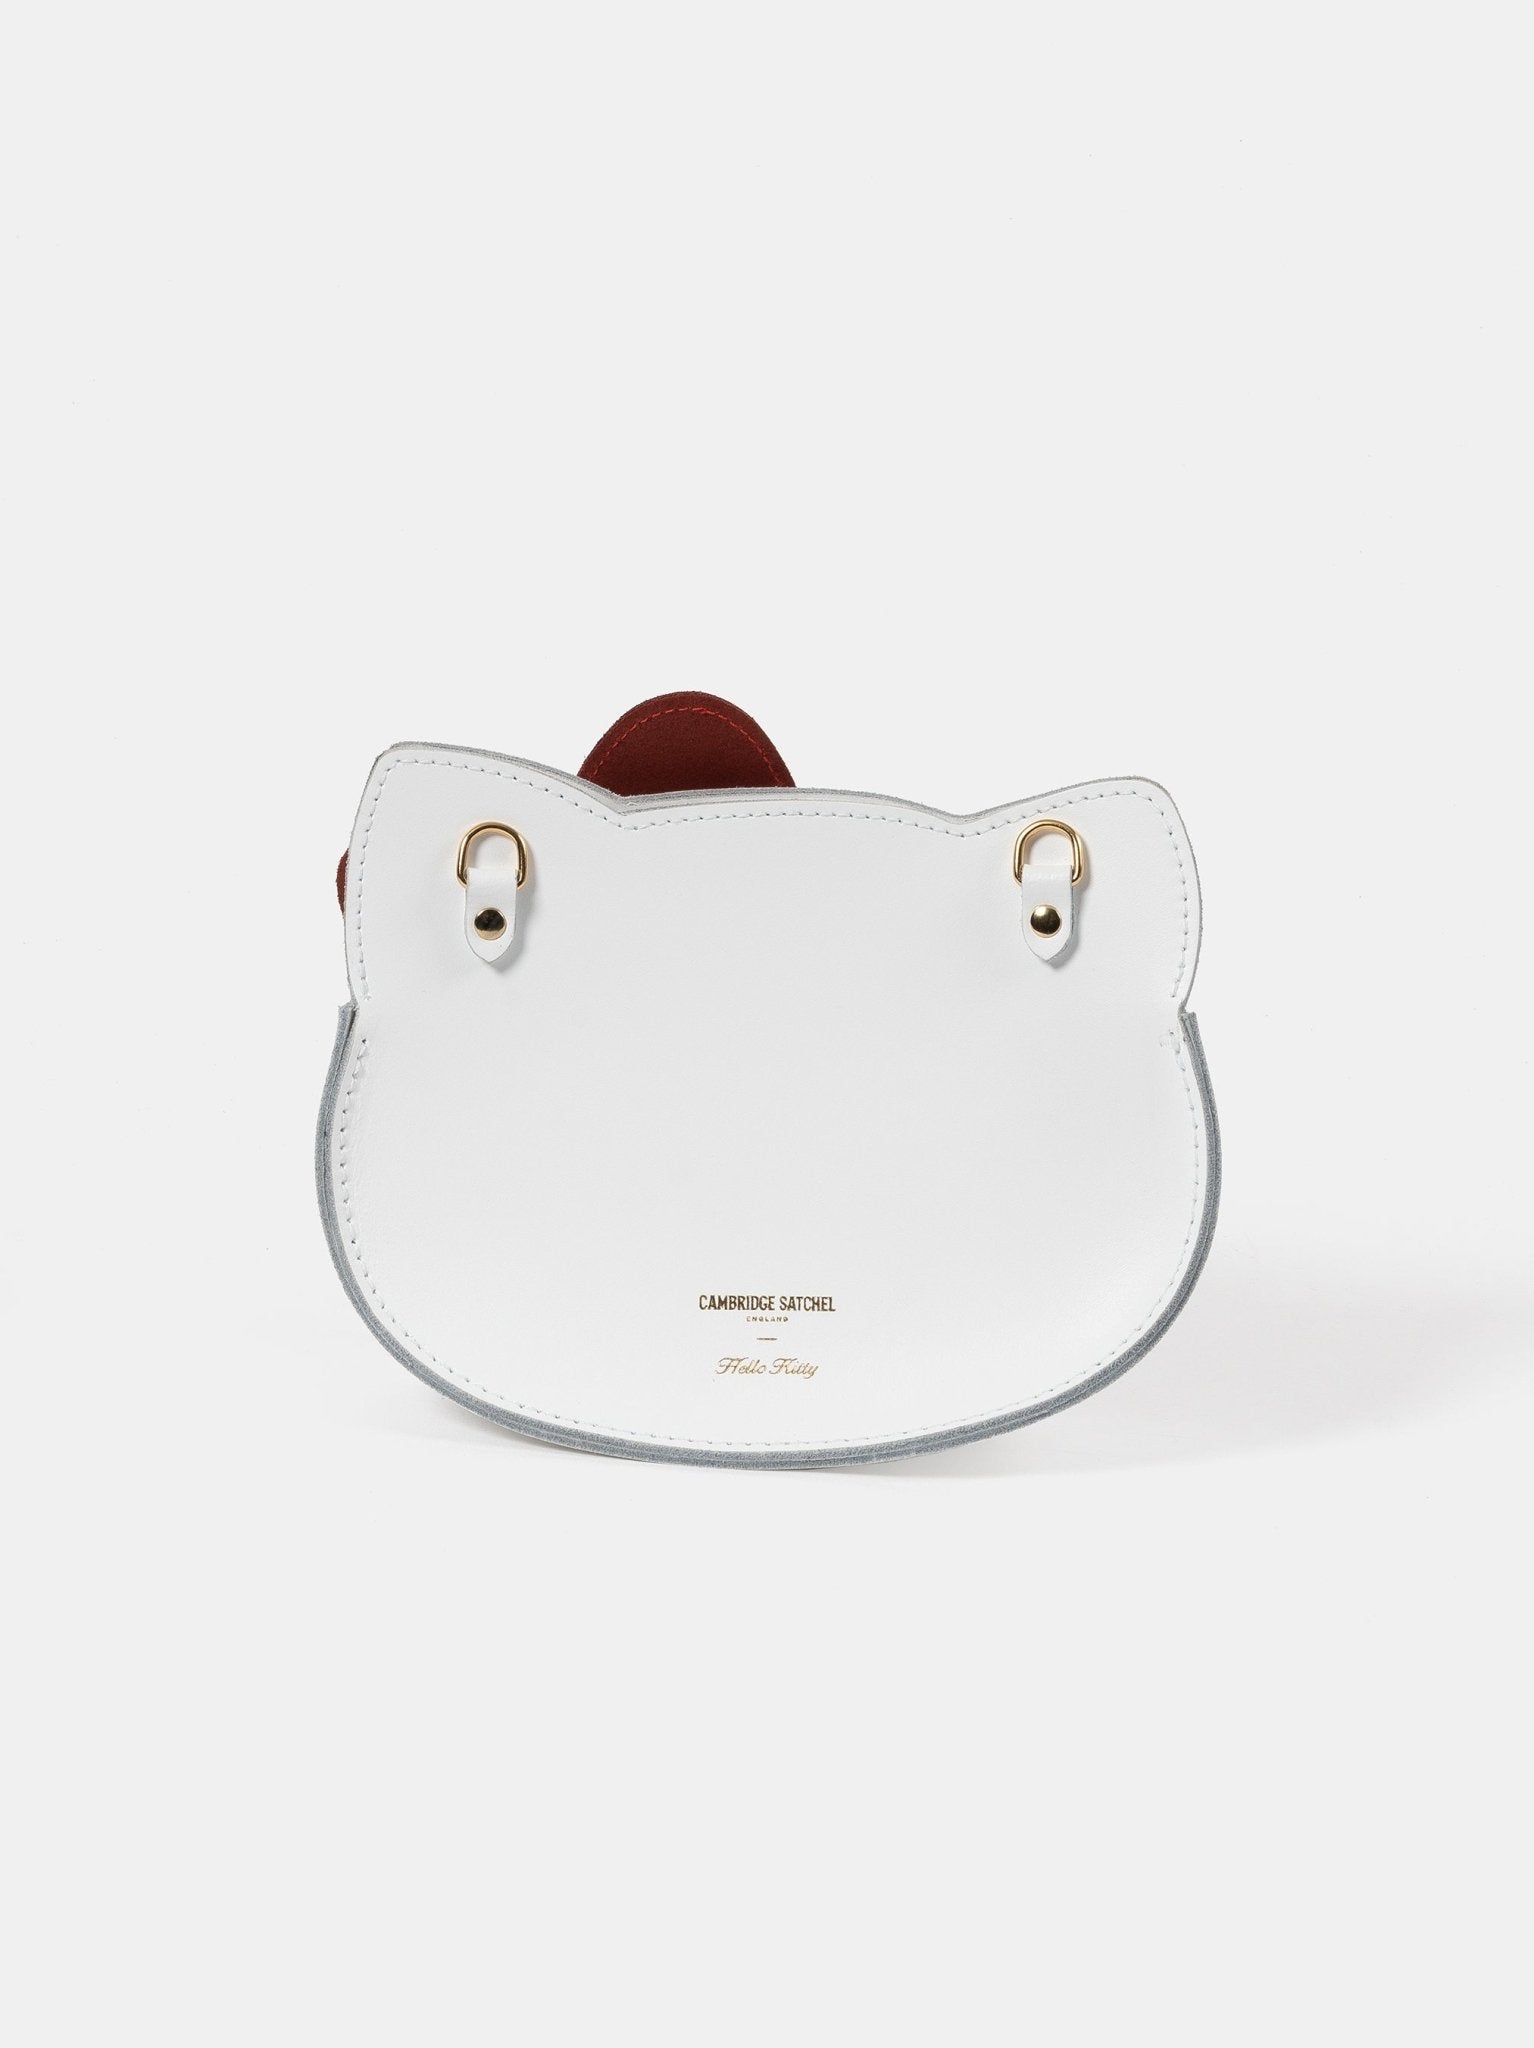 The Mini Hello Kitty Face Bag - The Cambridge Satchel Company EU Store